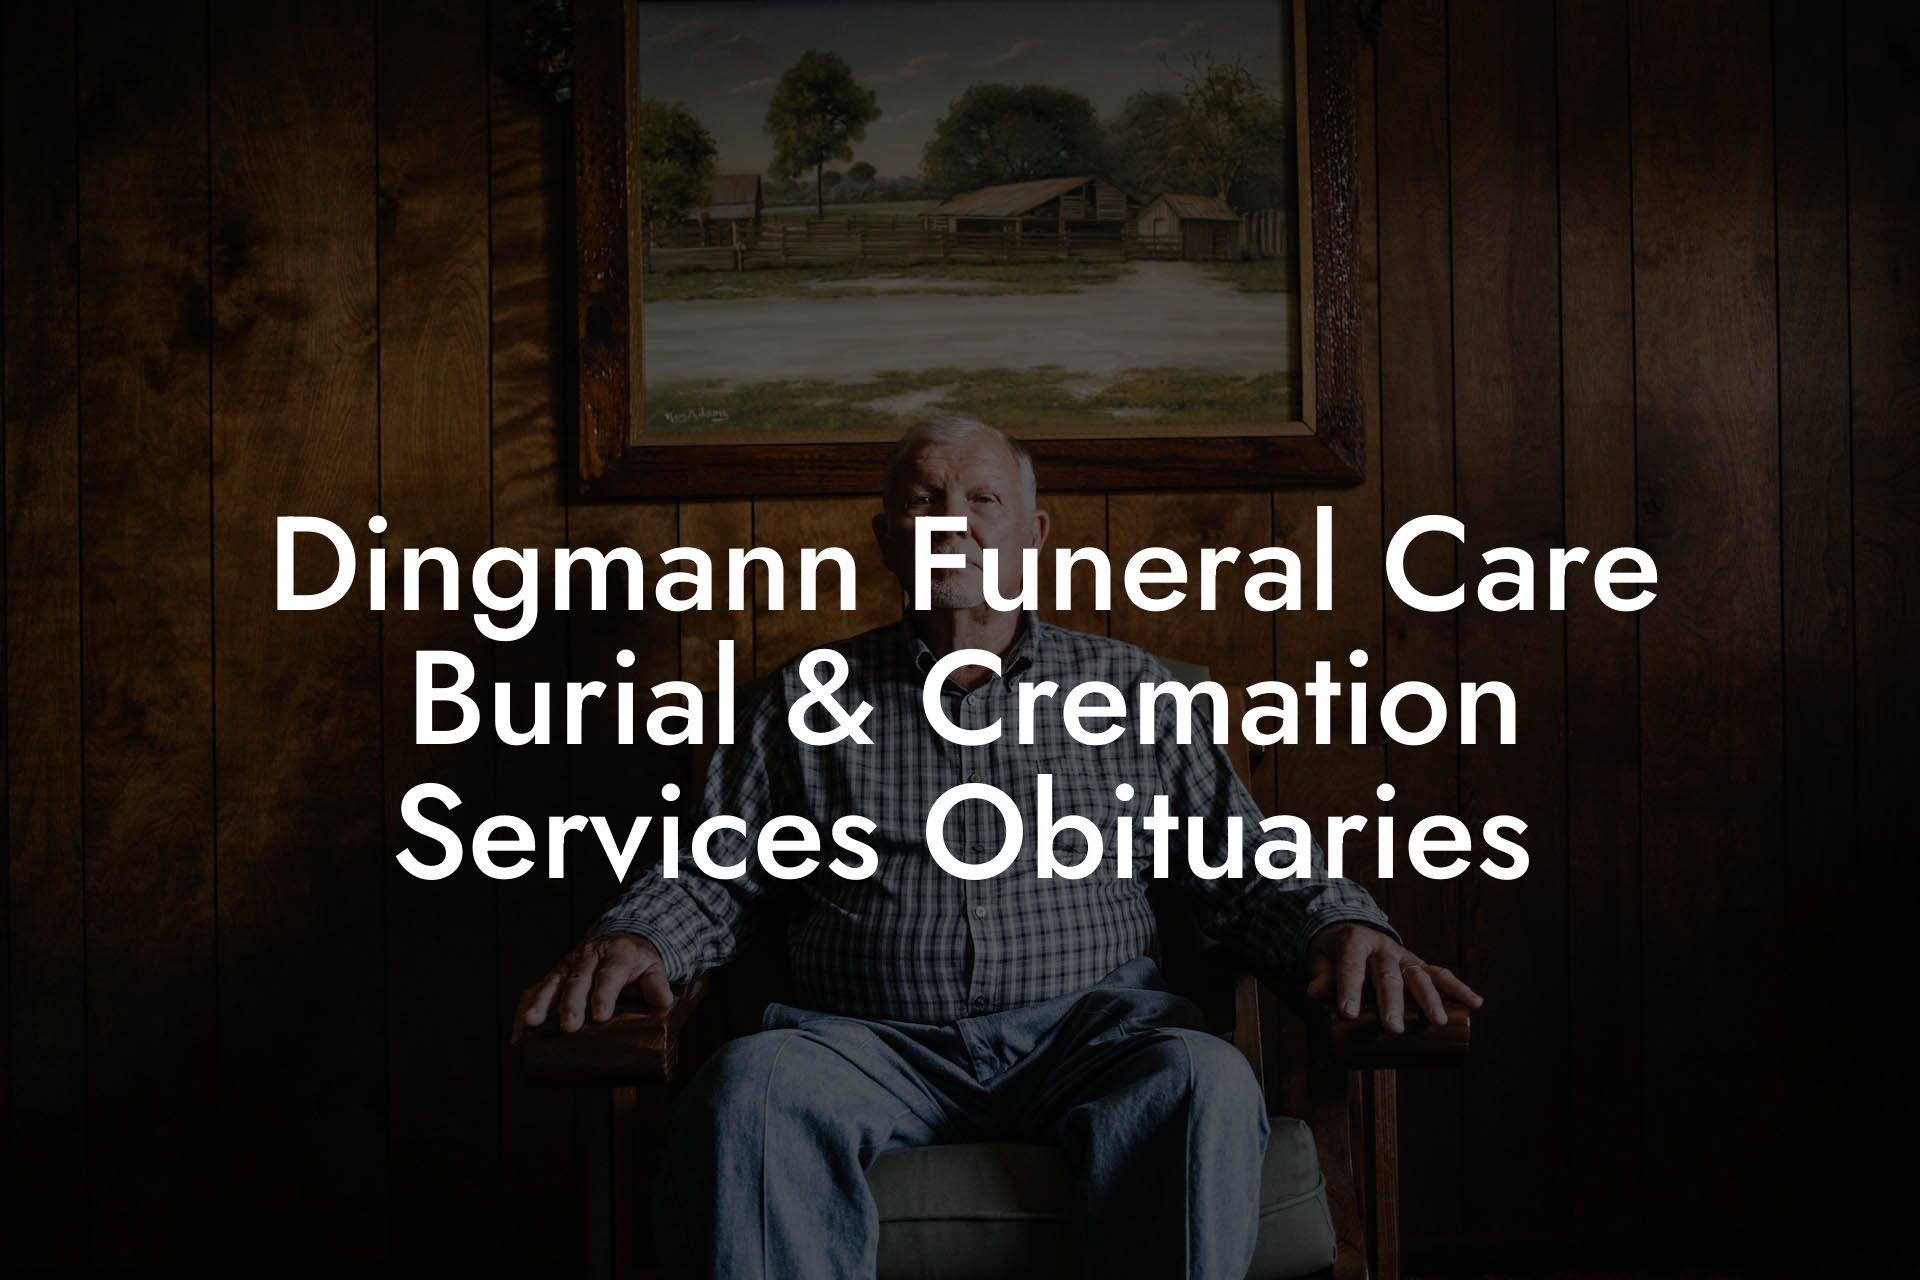 Dingmann Funeral Care Burial & Cremation Services Obituaries